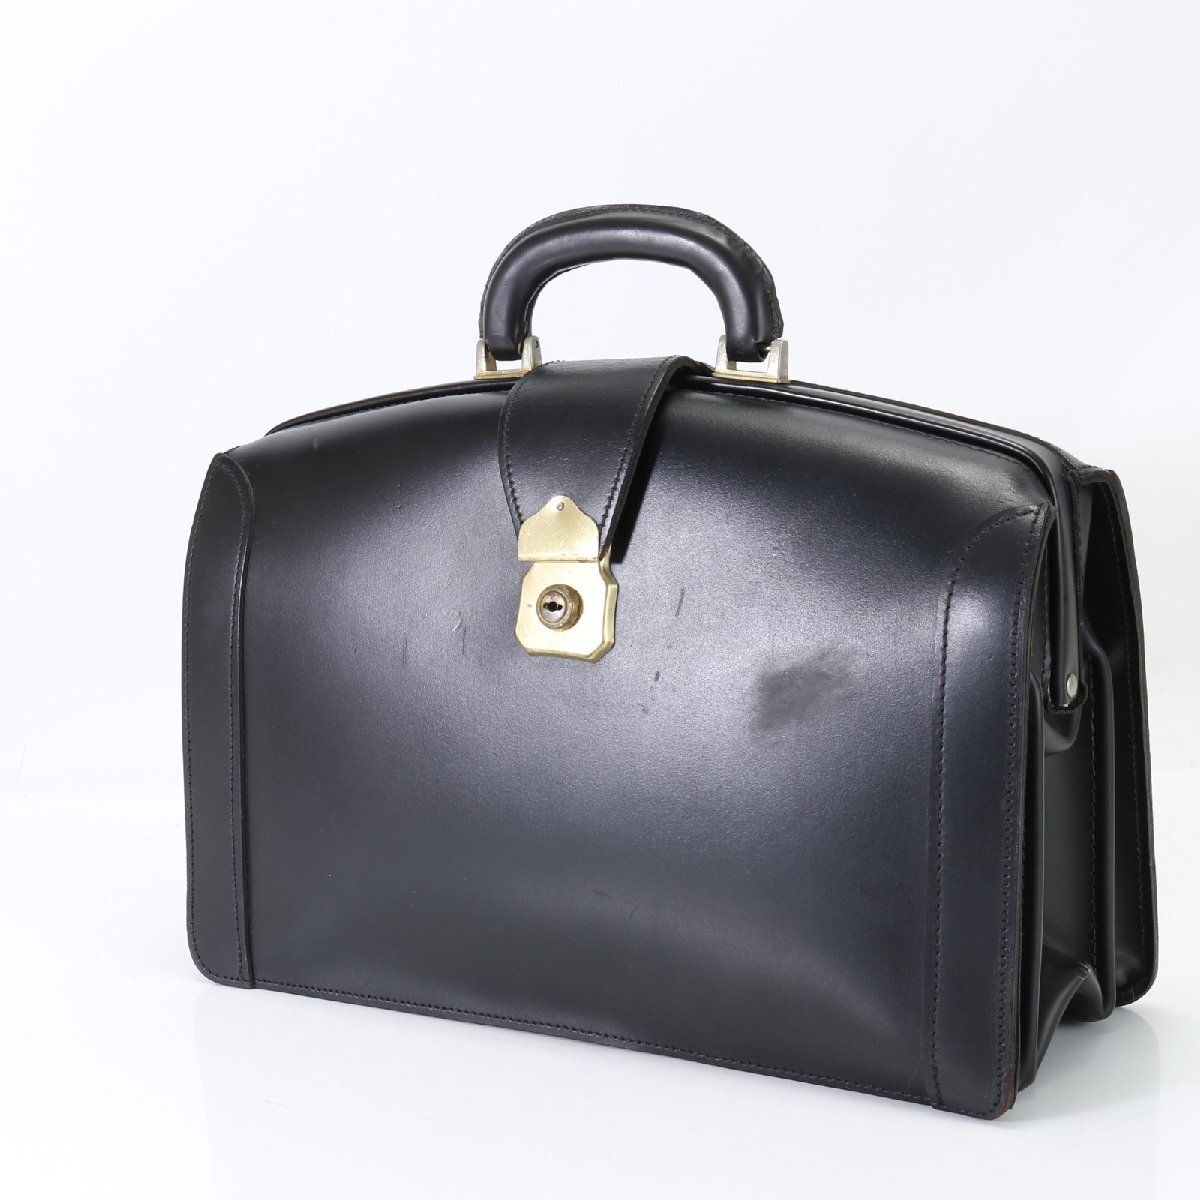 1 jpy Paul Smith leather business bag document bag briefcase tote bag commuting PC original leather black black gentleman A4 men's Dulles bag EHM L1-7